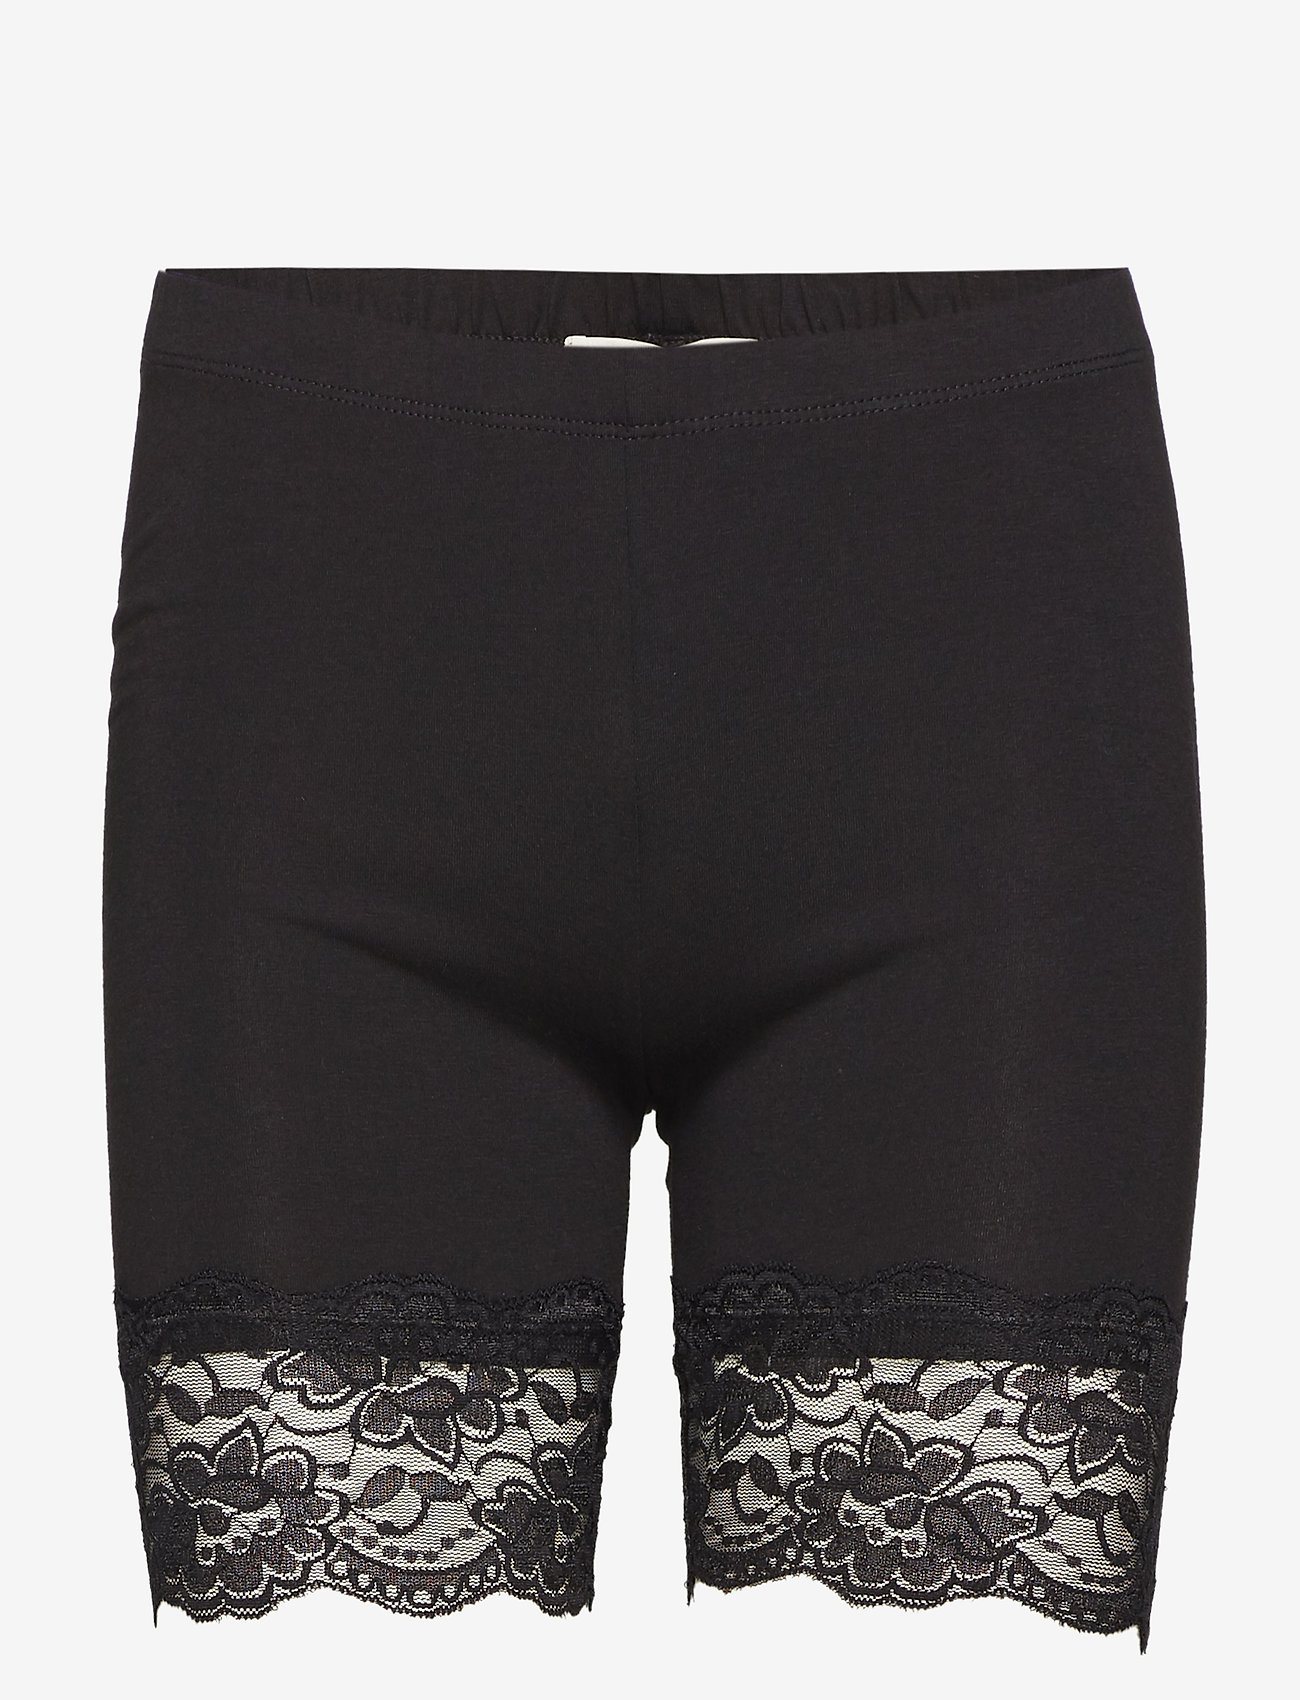 Cream - Matilda Biker Shorts - najniższe ceny - pitch black - 0